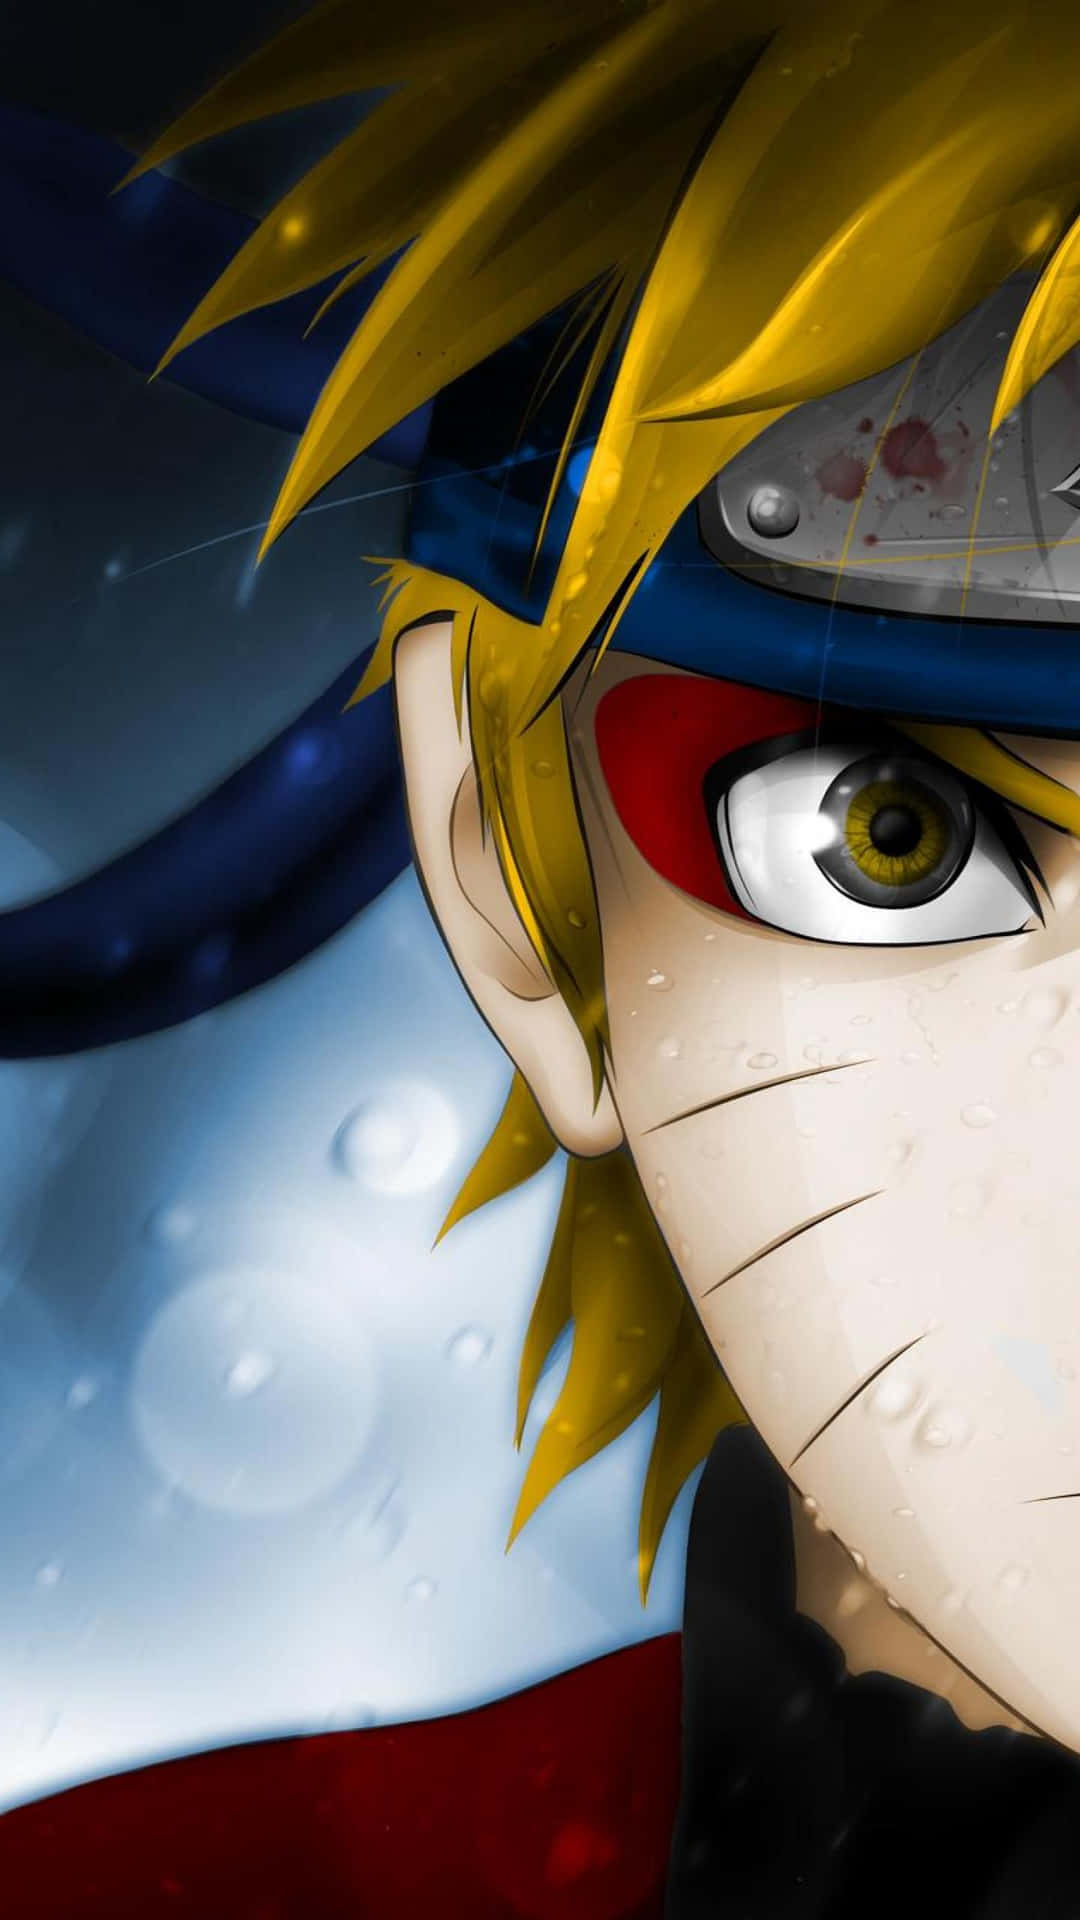 Powerful Naruto - Epic Phone Background!